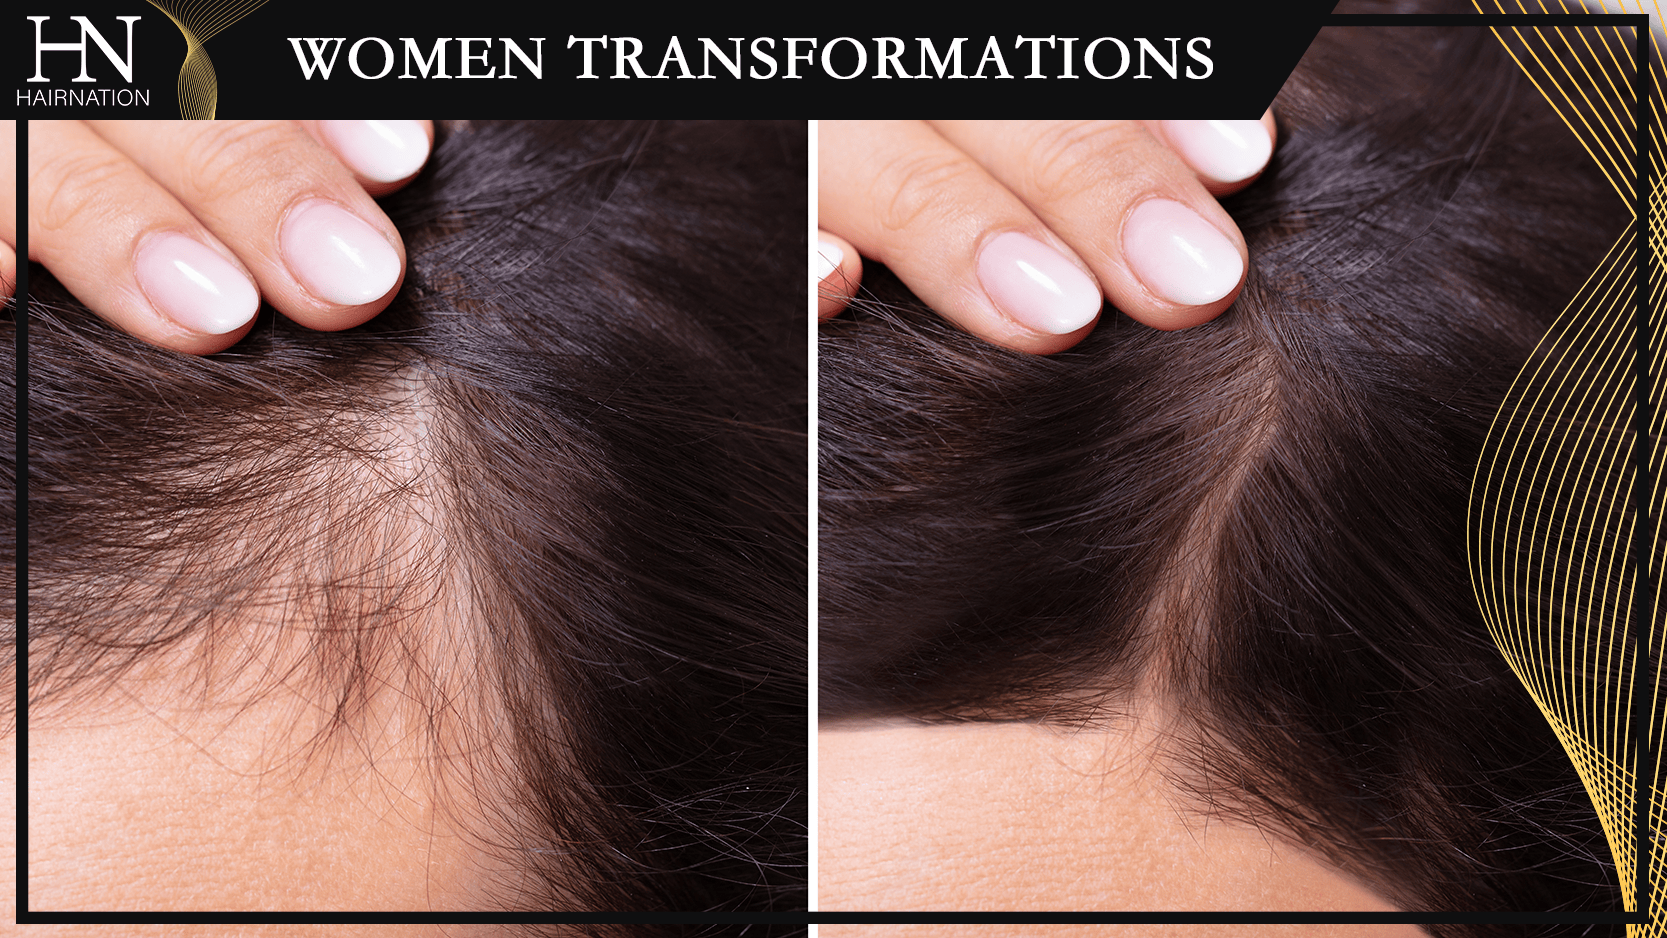 Women's Hair Loss Transformations